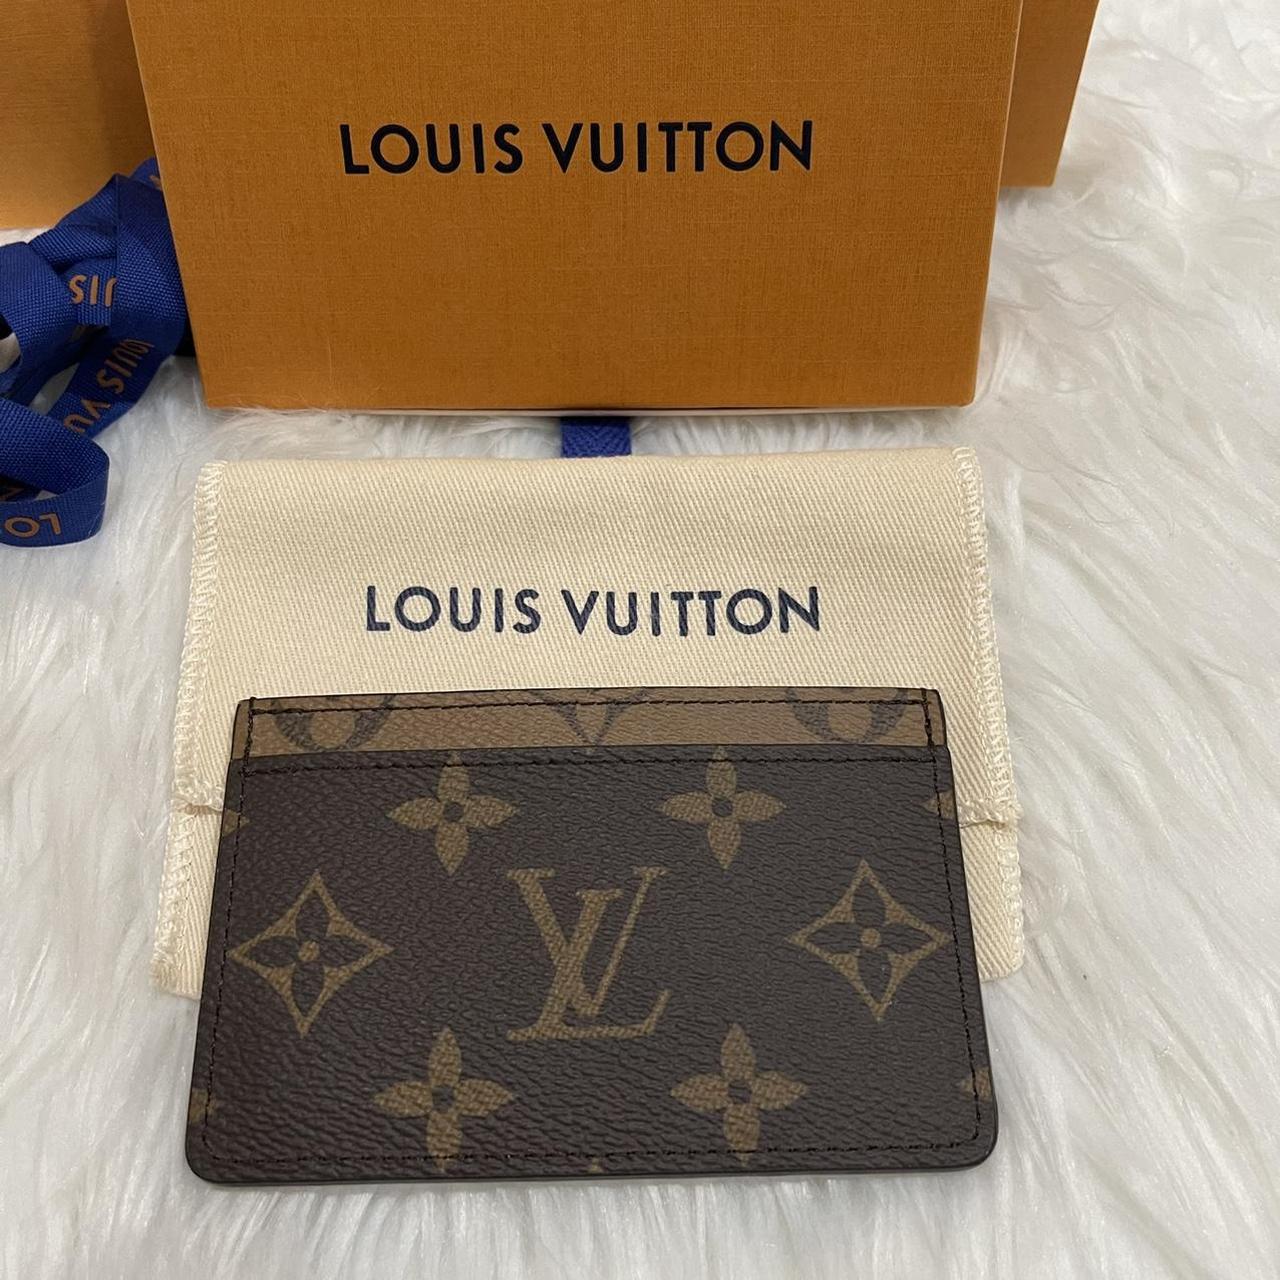 Supreme x Louis Vuitton Wallet - Depop